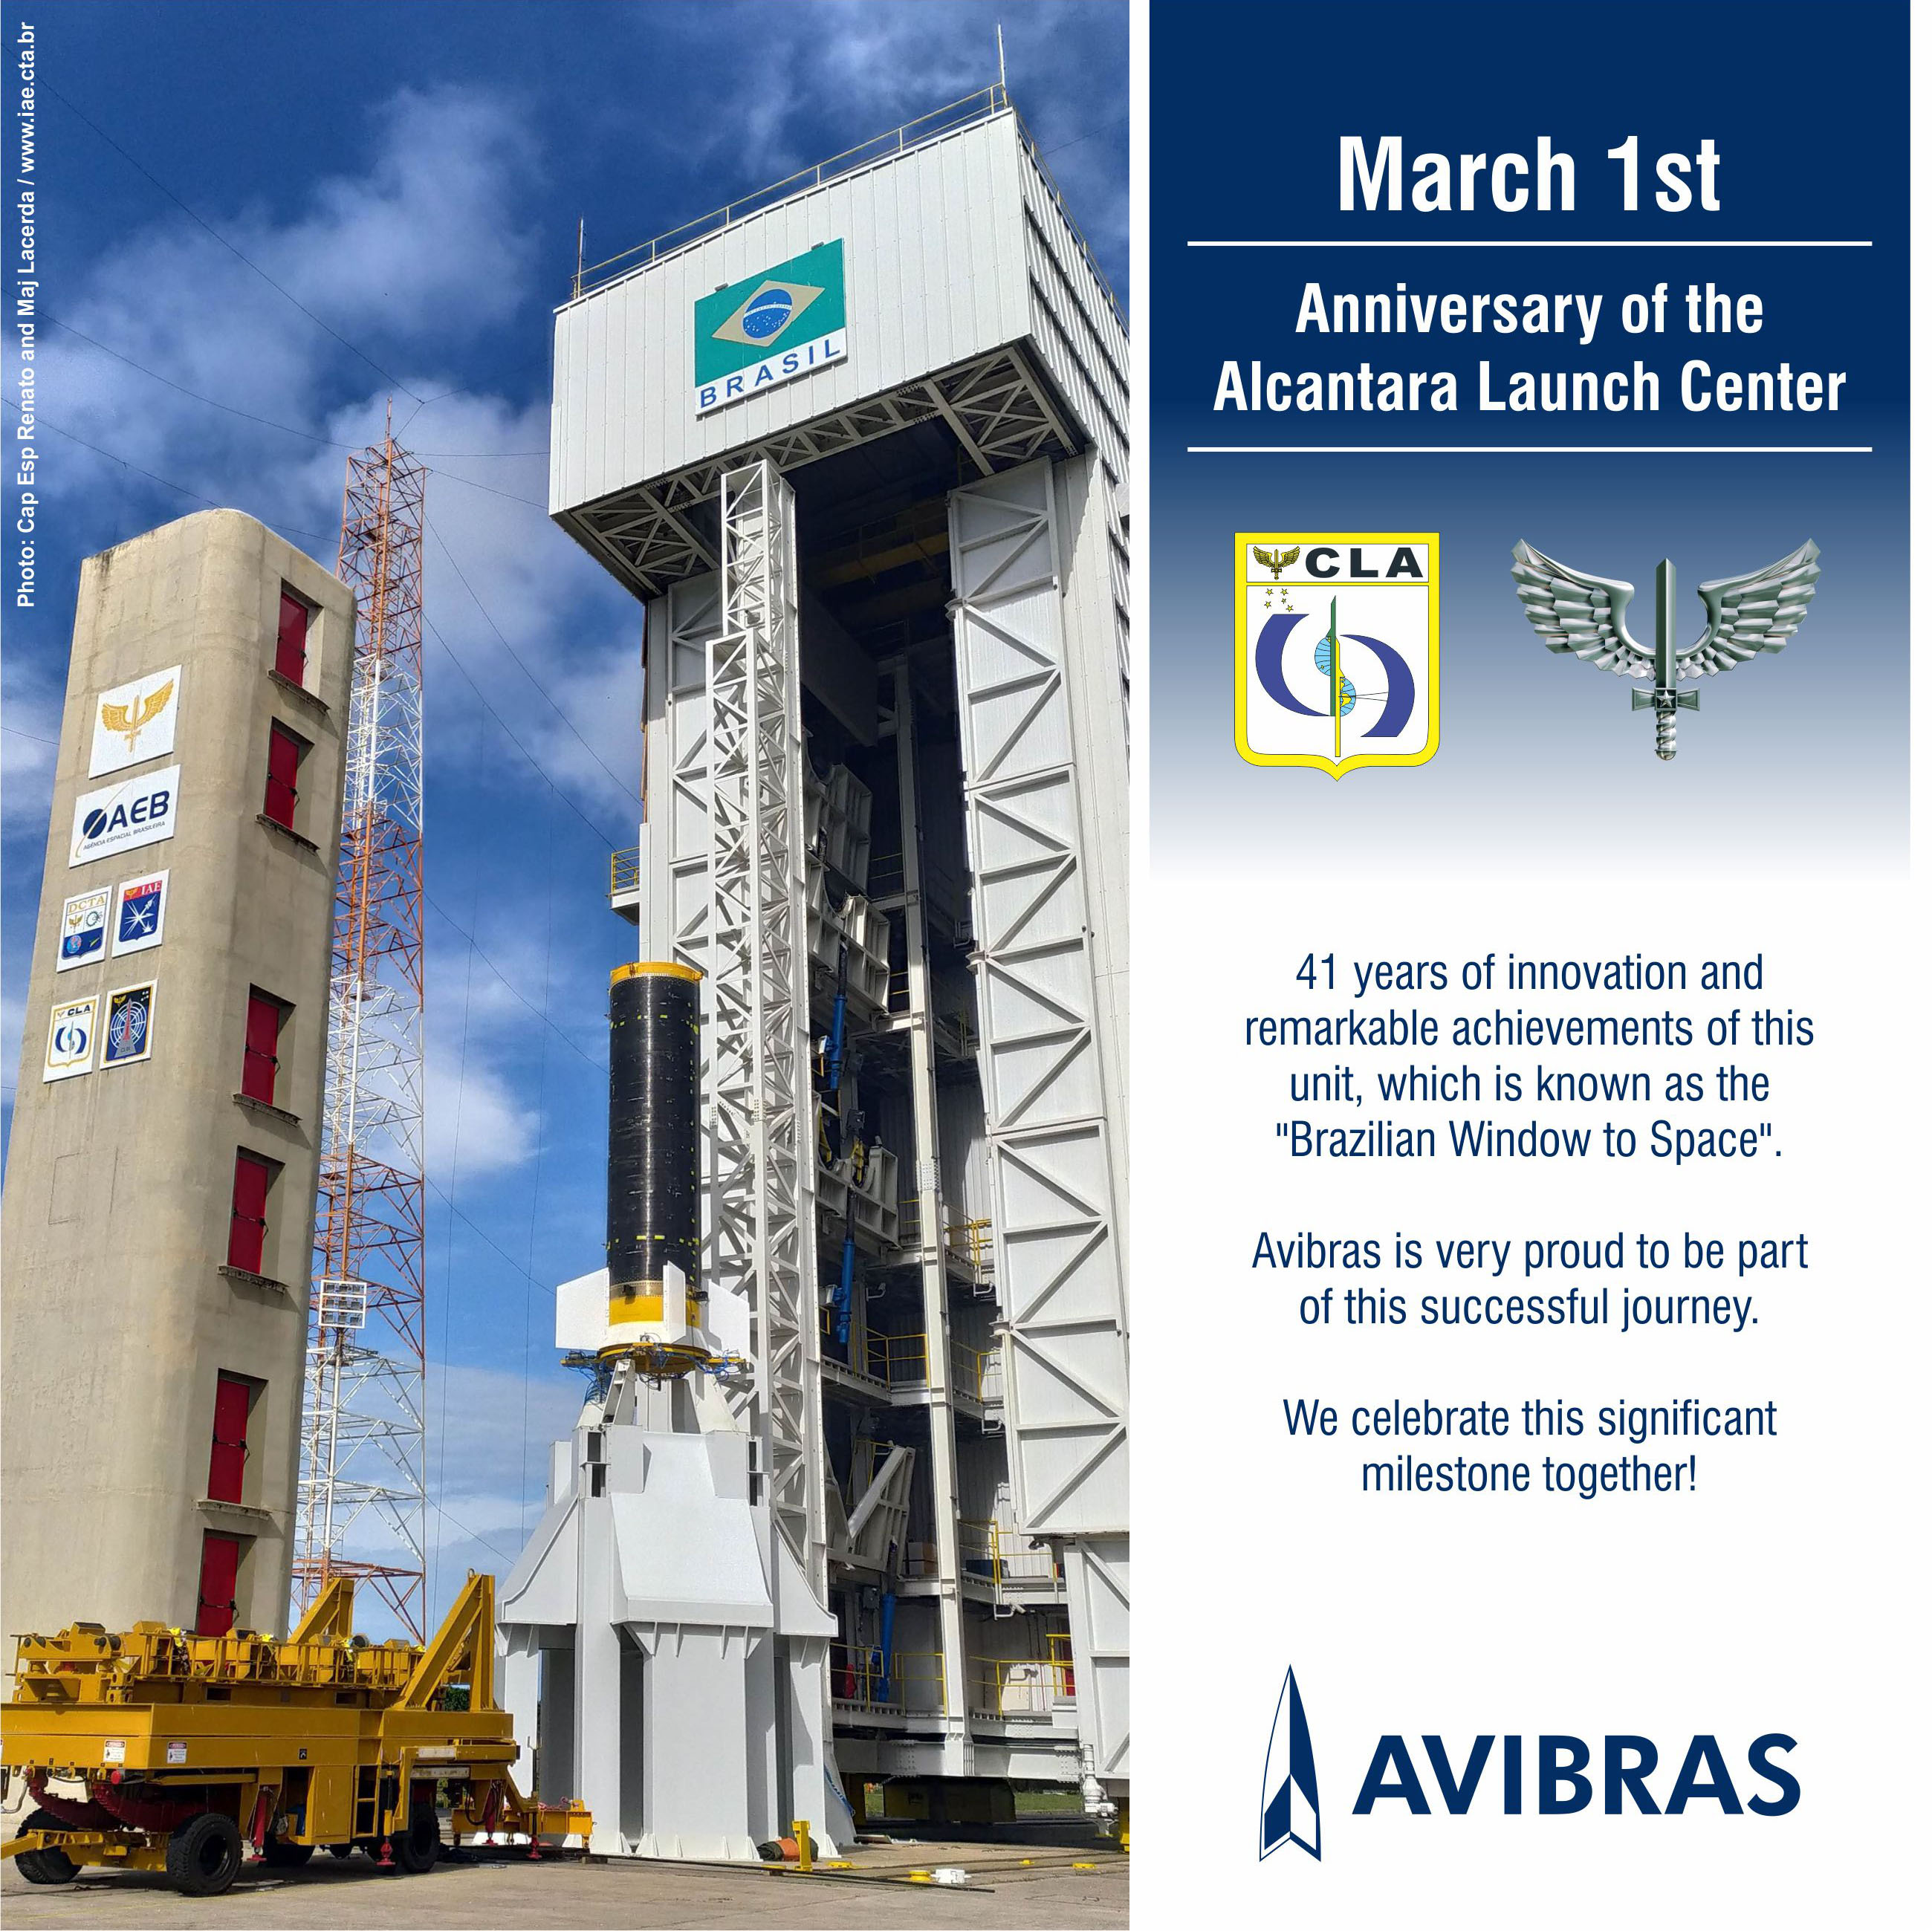 Avibras' tribute to the 41st anniversary of the Alcântara Launch Center